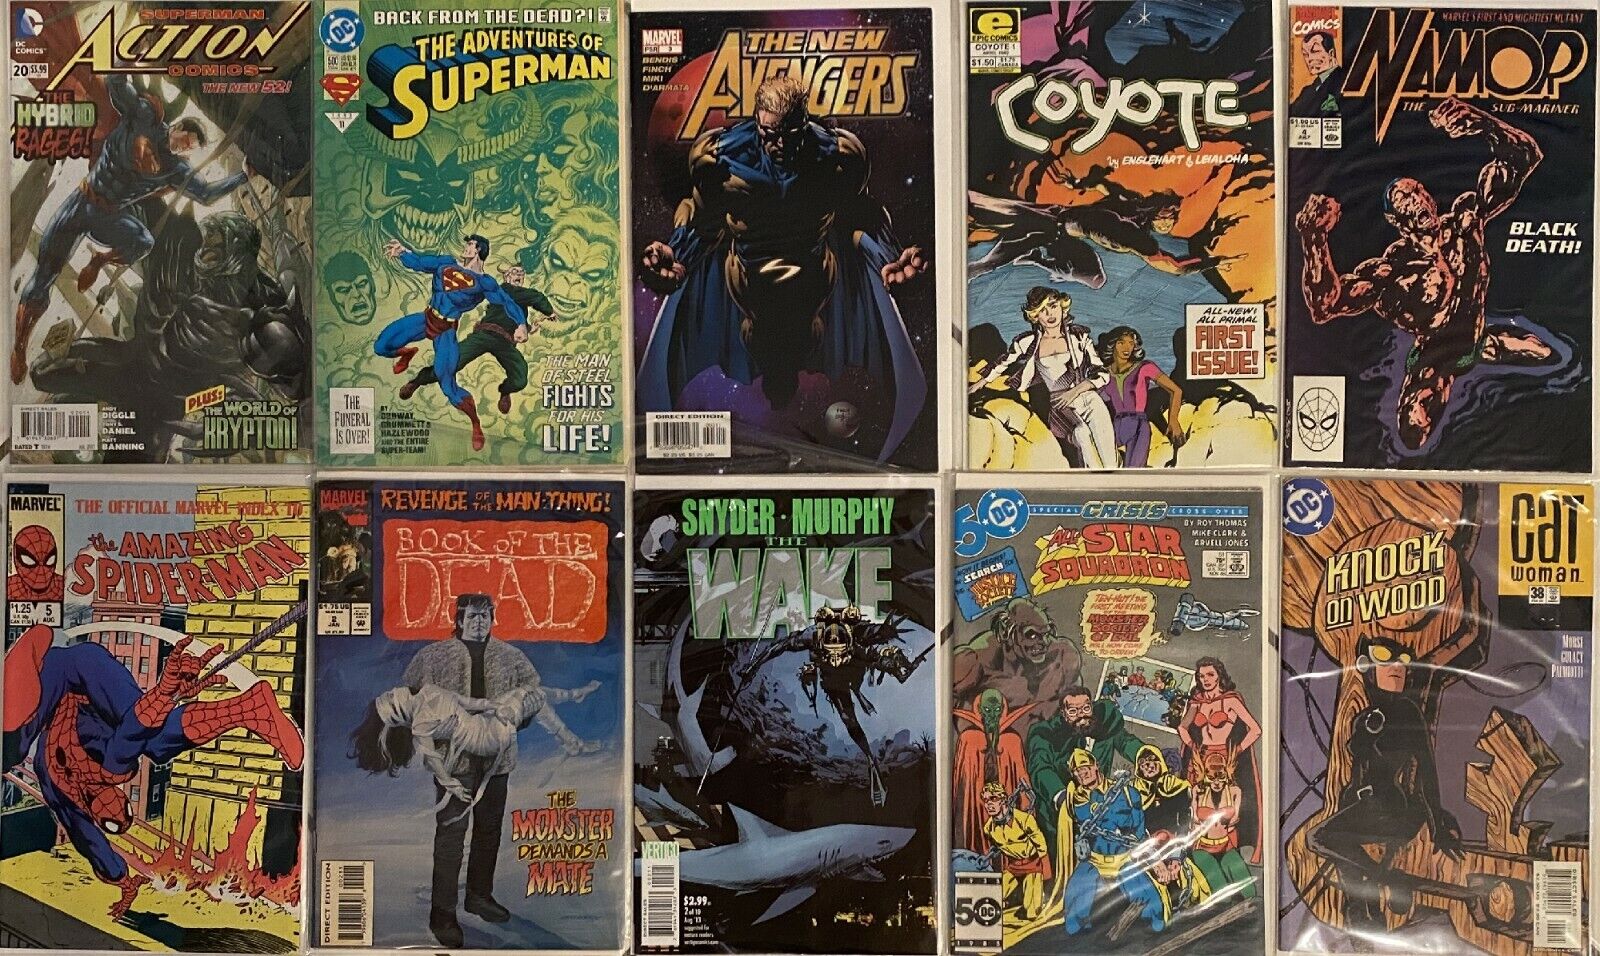 10 Comics Book of Dead Cat Woman Spider-man Namor Superman Coyote and More